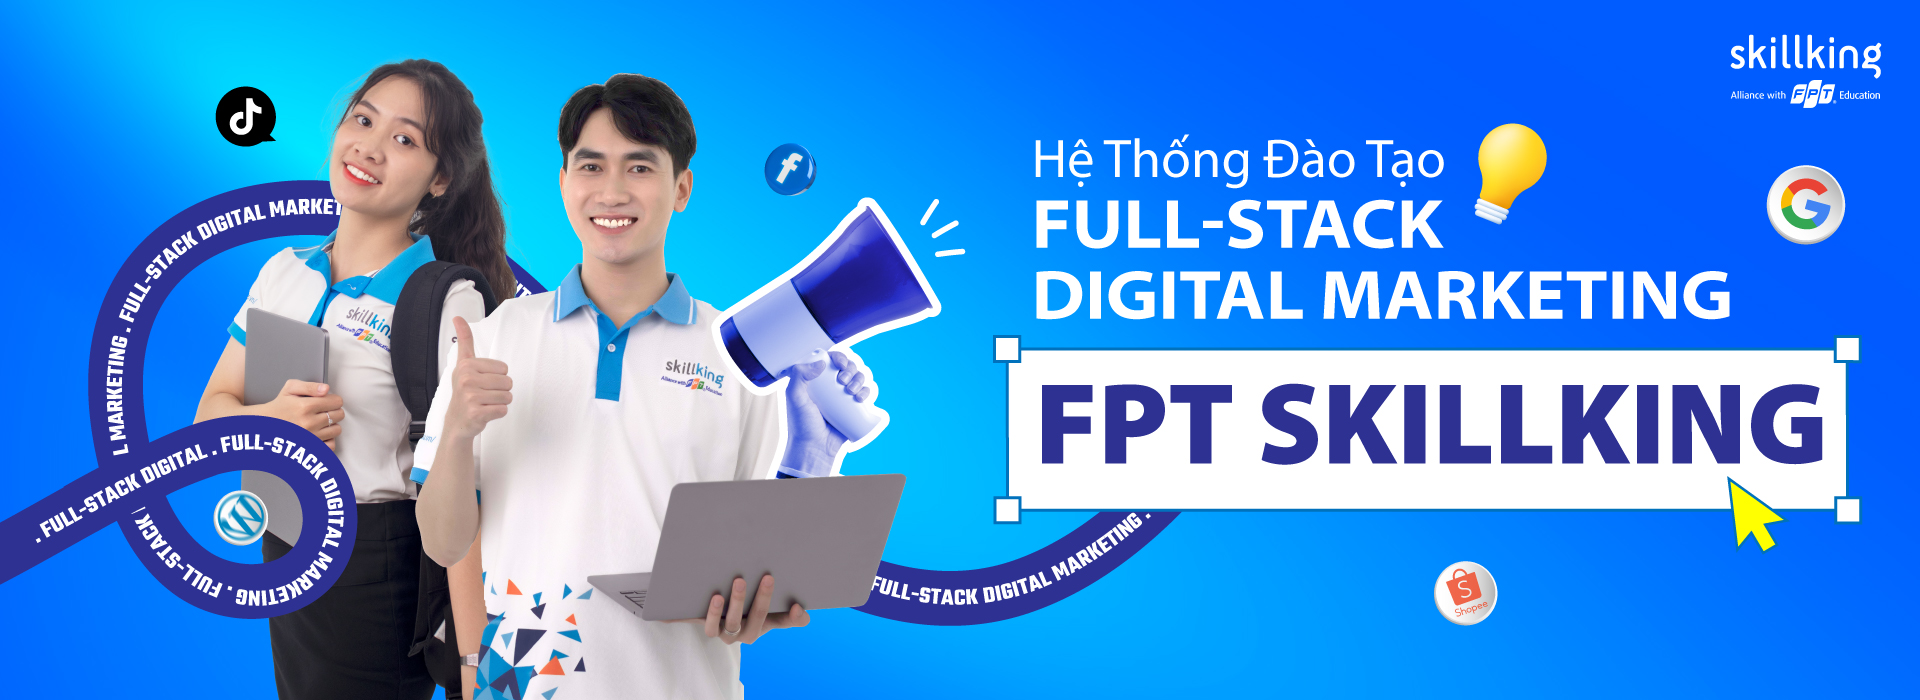 he thong dao tao Full stack Digital Marketing FPT Skillking 1